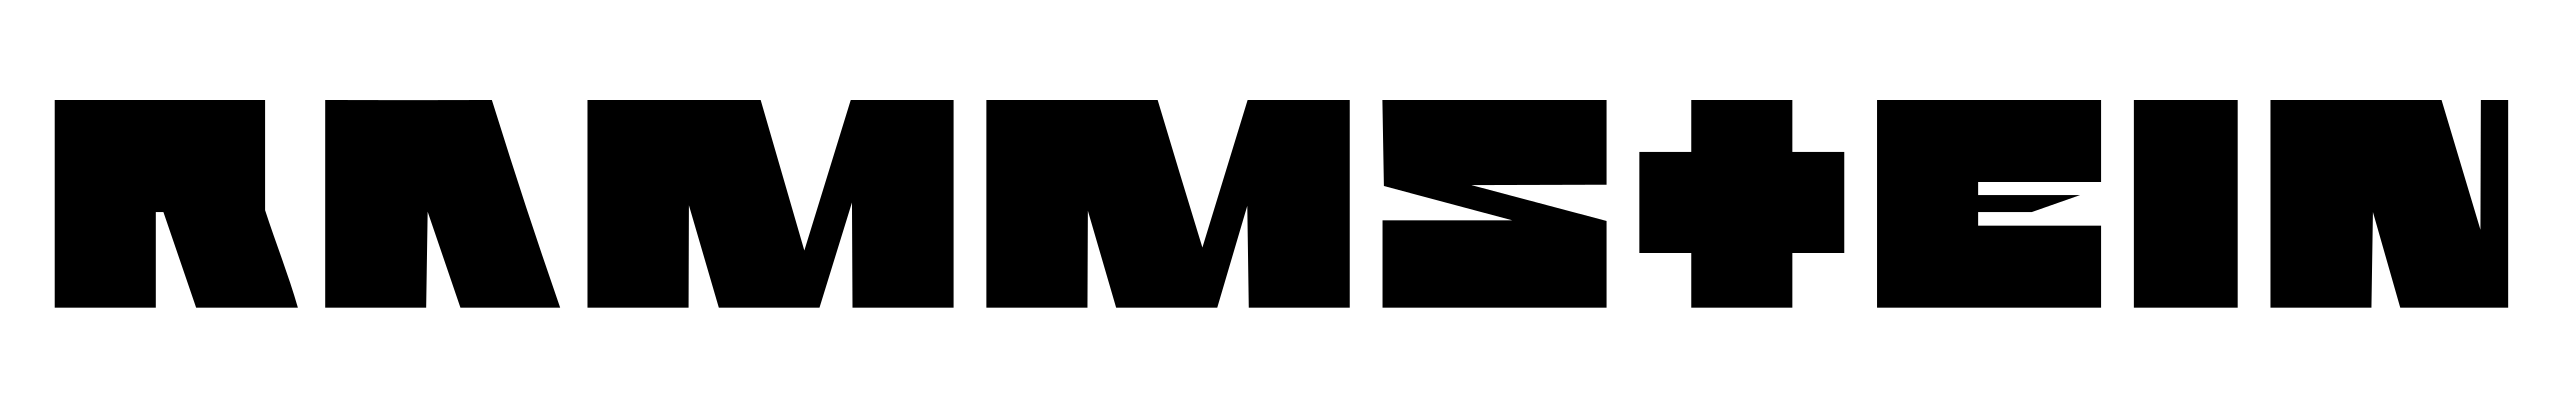 File:Rammstein logo.svg - Wikimedia Commons